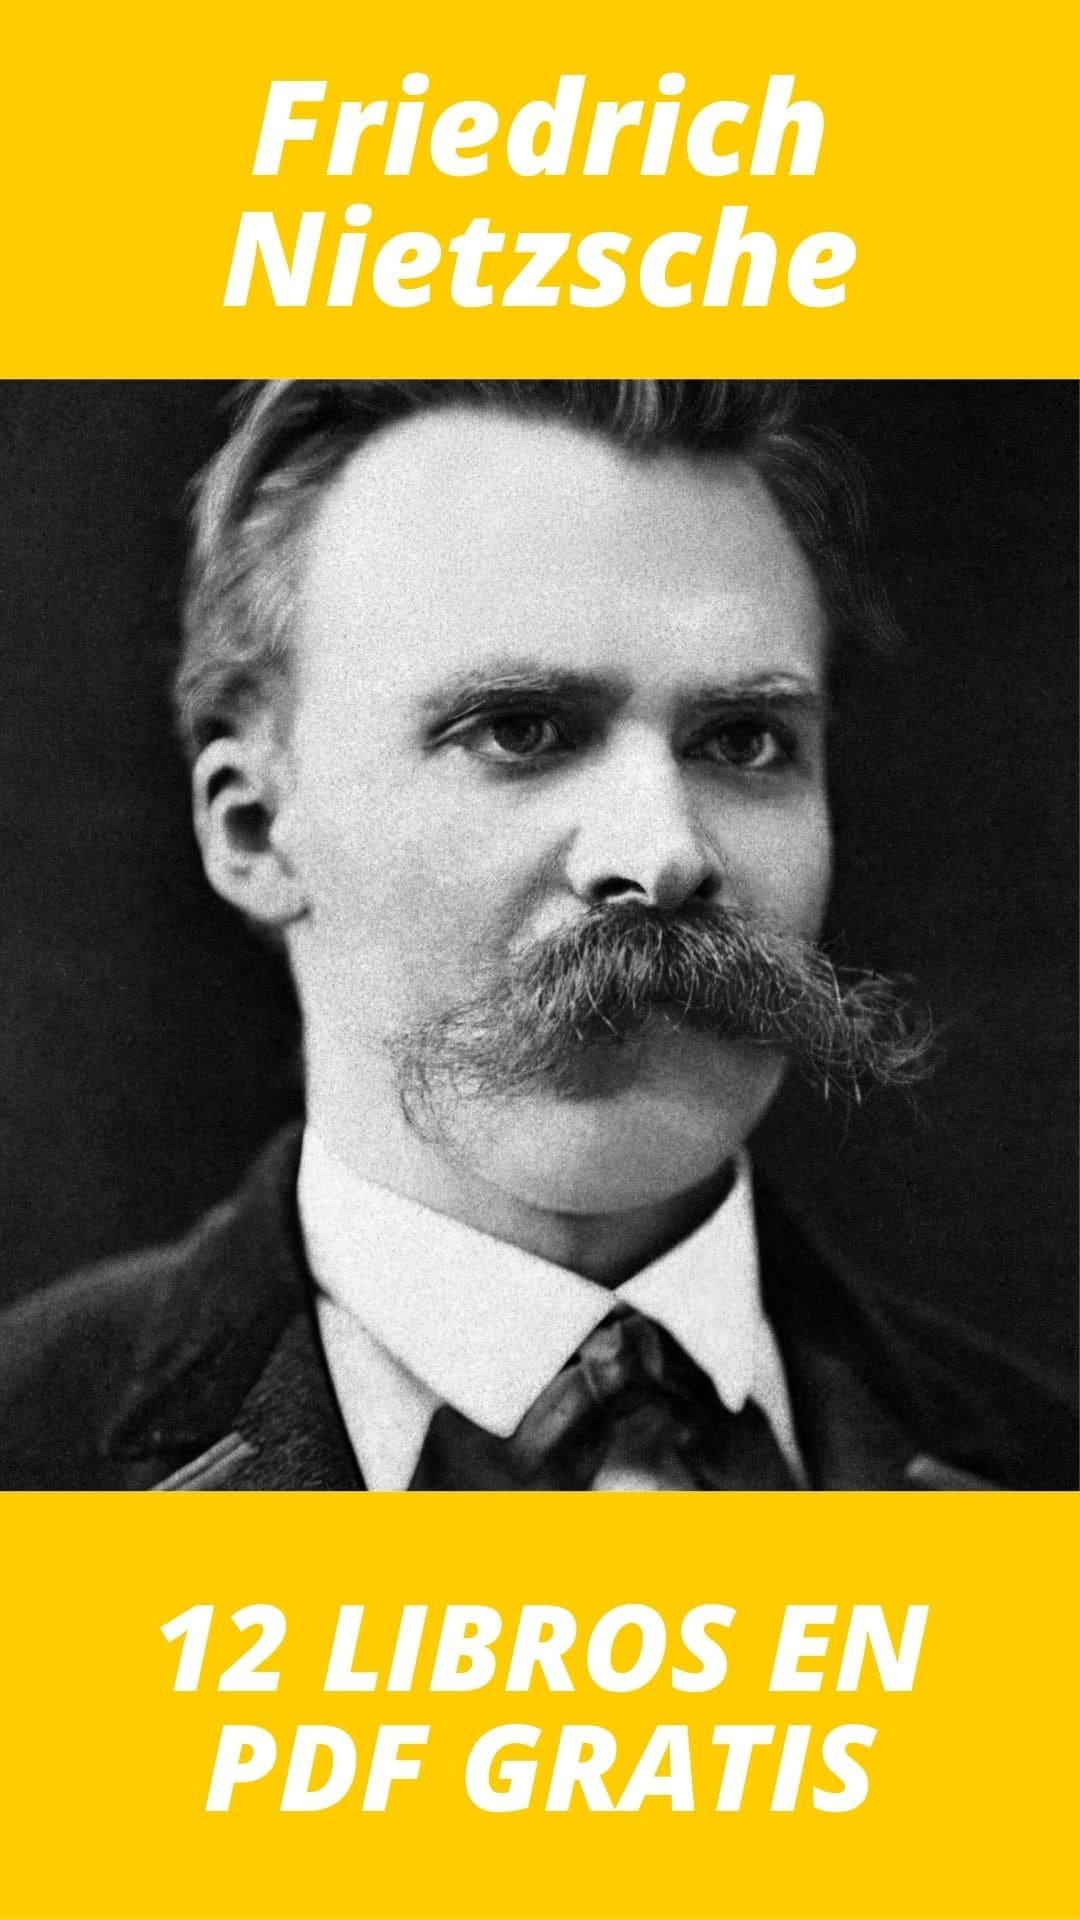 Libros de Friedrich Nietzsche Gratis en PDF